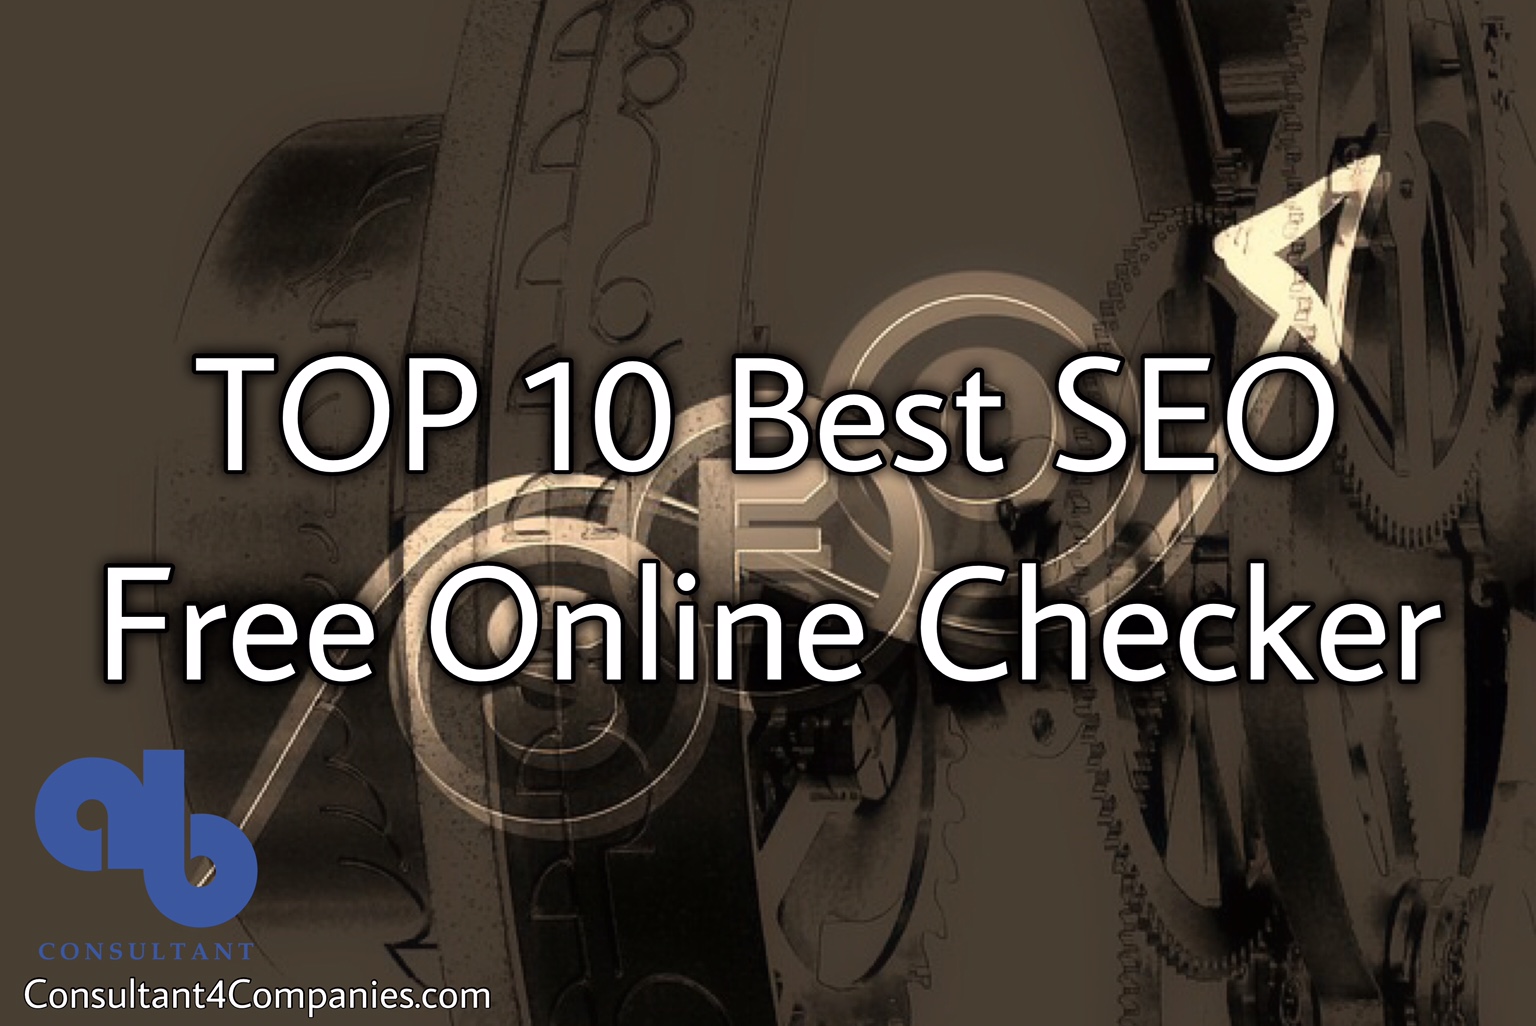 TOP 10 Best SEO Free Online Checker